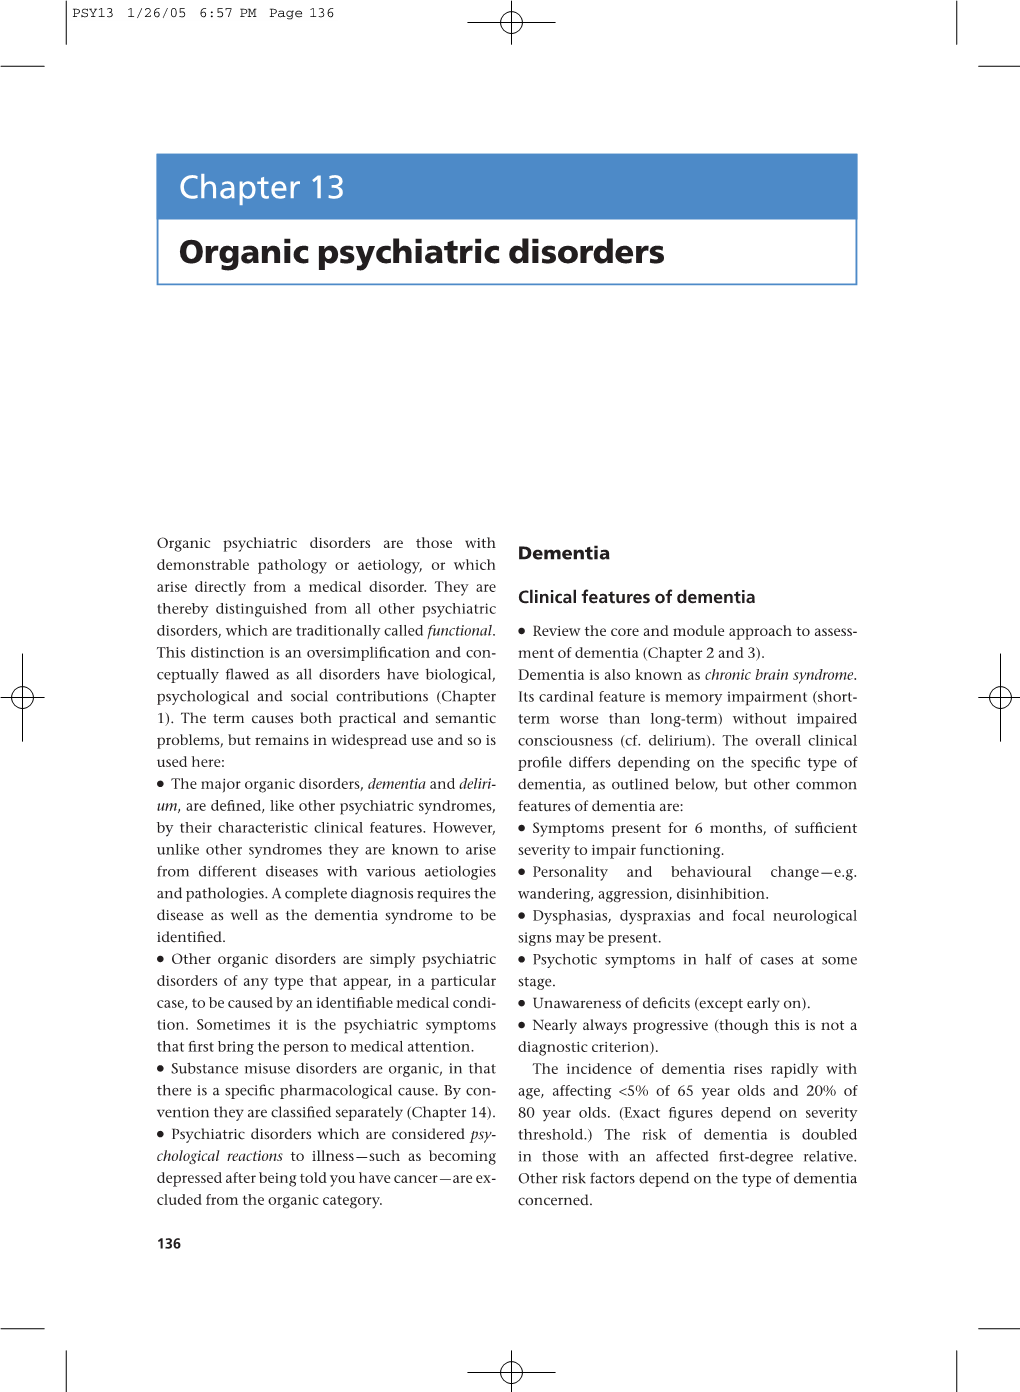 Chapter 13 Organic Psychiatric Disorders